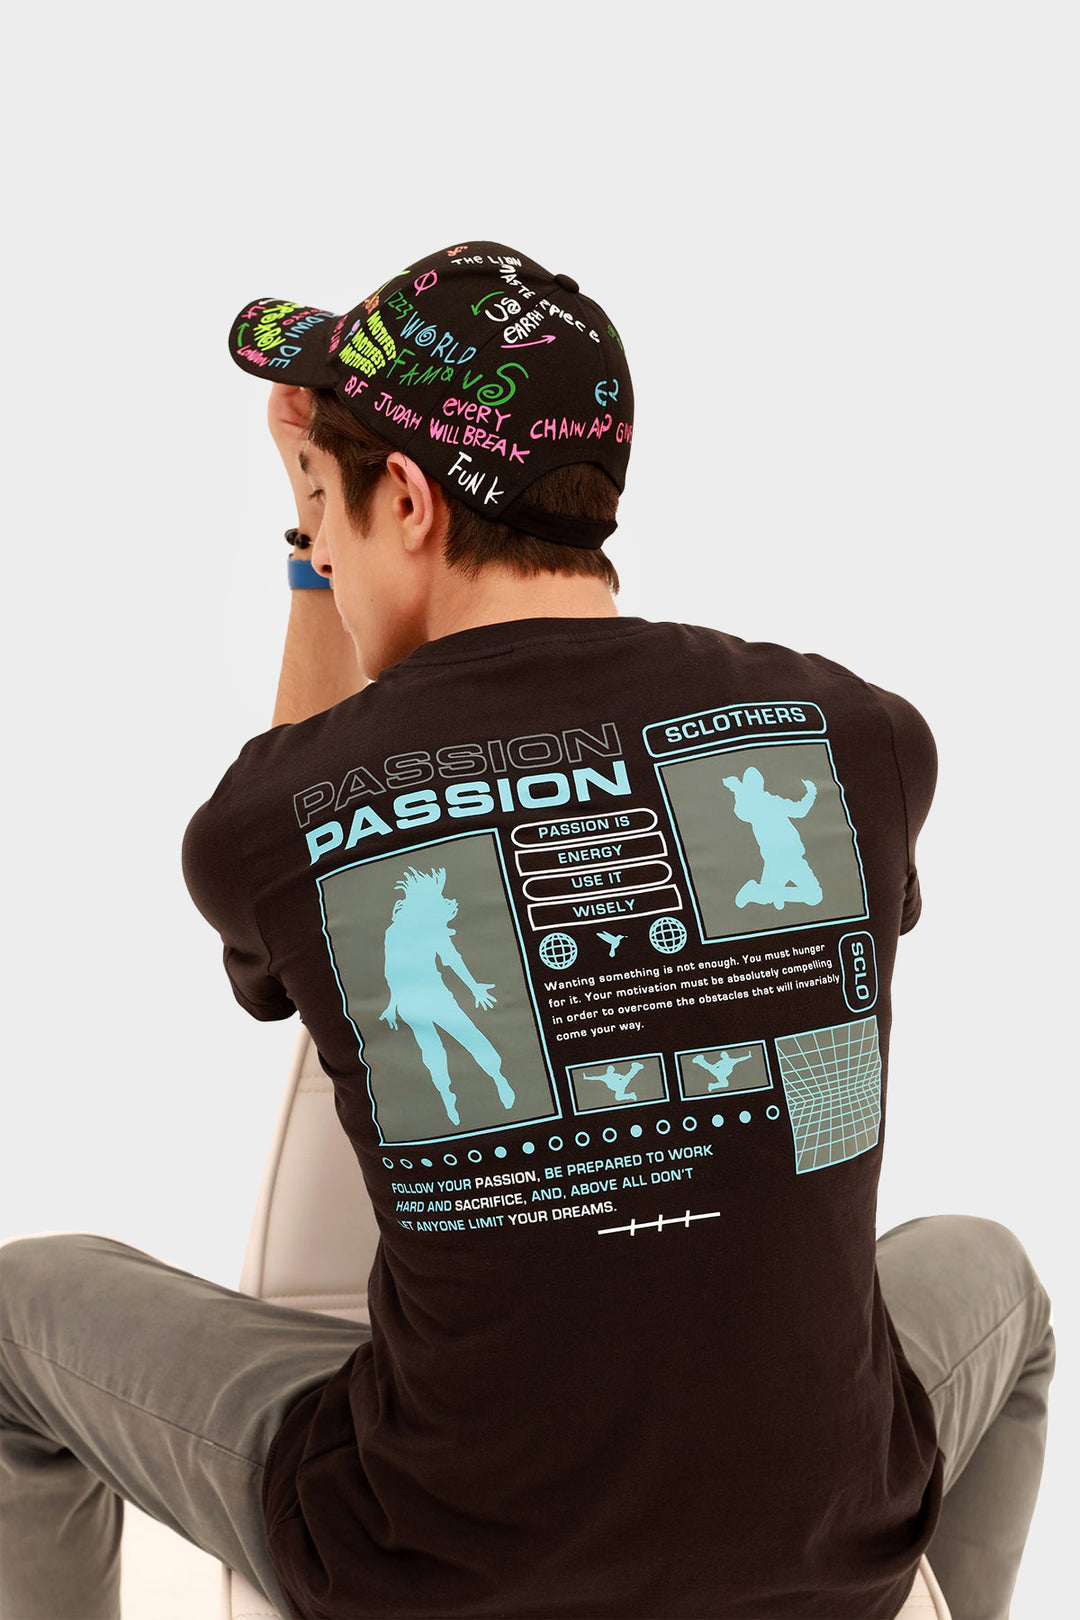 Passion Graphic T-Shirt - S22 - MT0161R